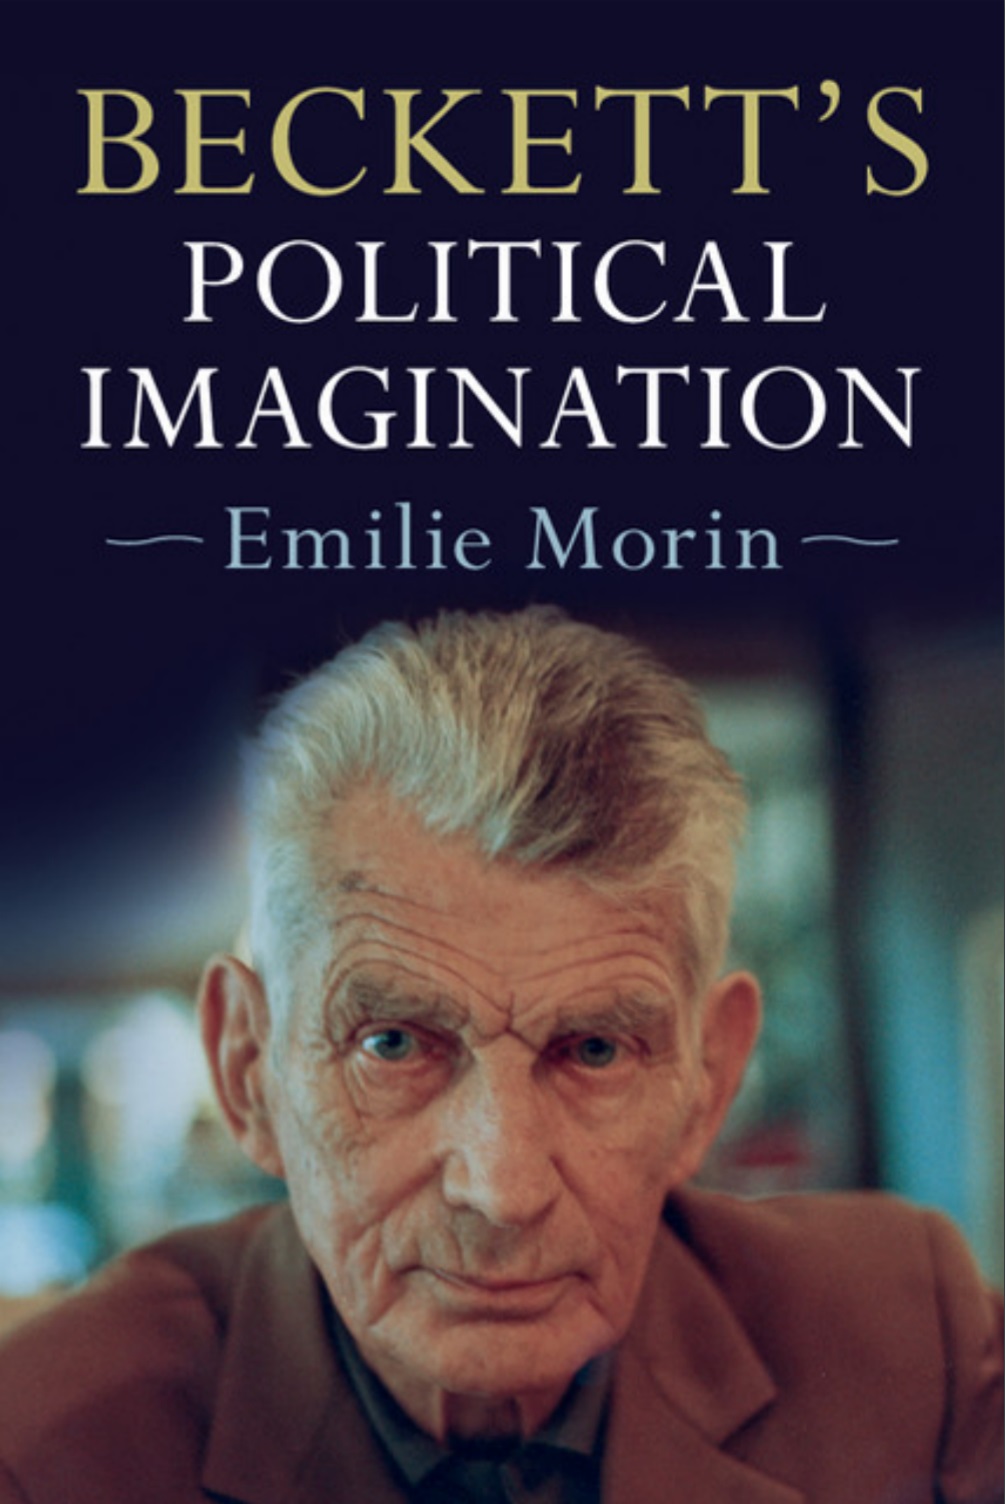 Emilie-morin-becketts-political-imagionation-theoryleaks.jpg